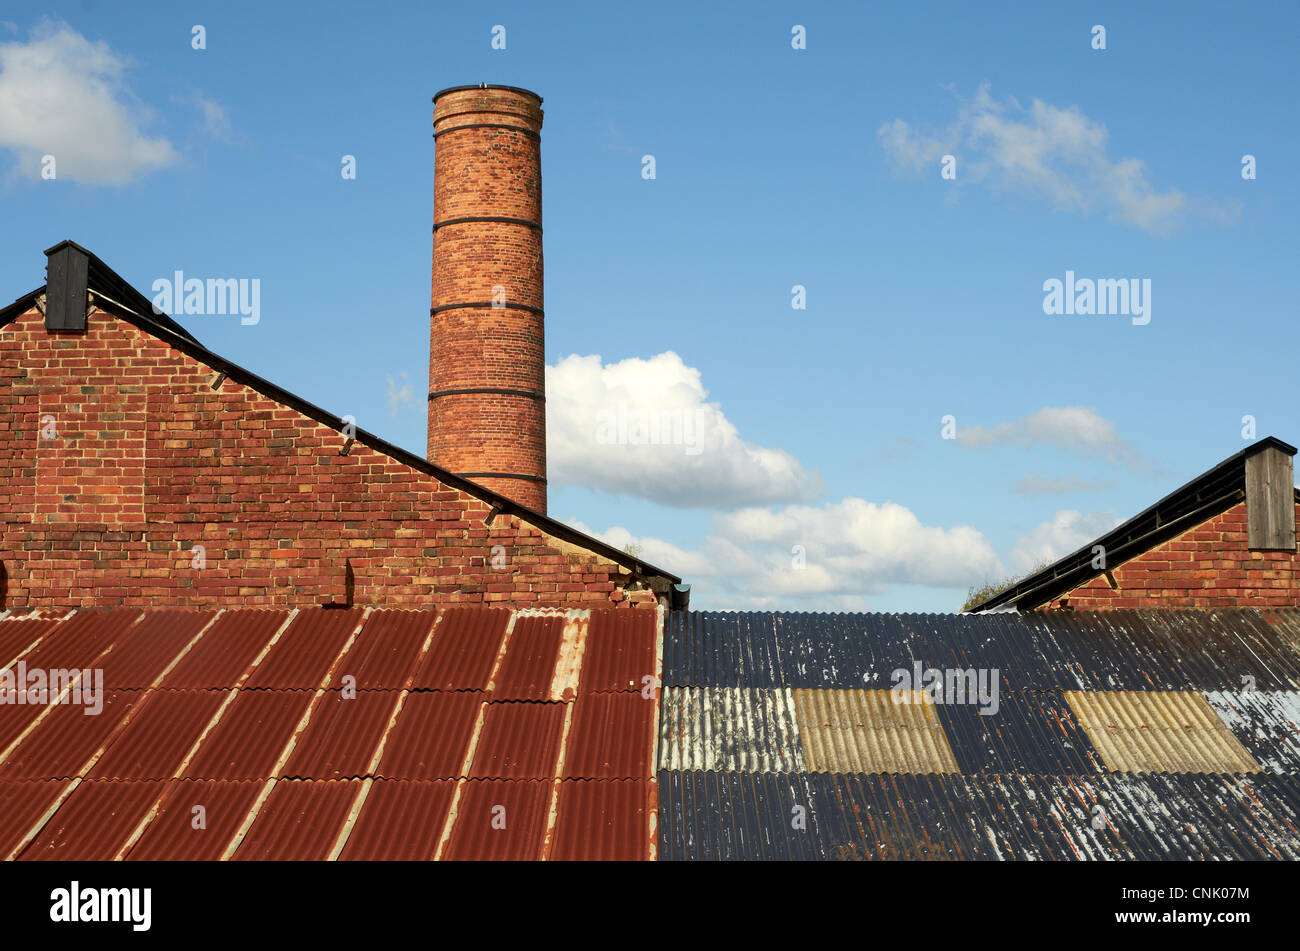 Edwardian industrial buildings, Bursledon Brickworks Industrial Museum, Hampshire, England, brick construction & some tin roofs. Stock Photo